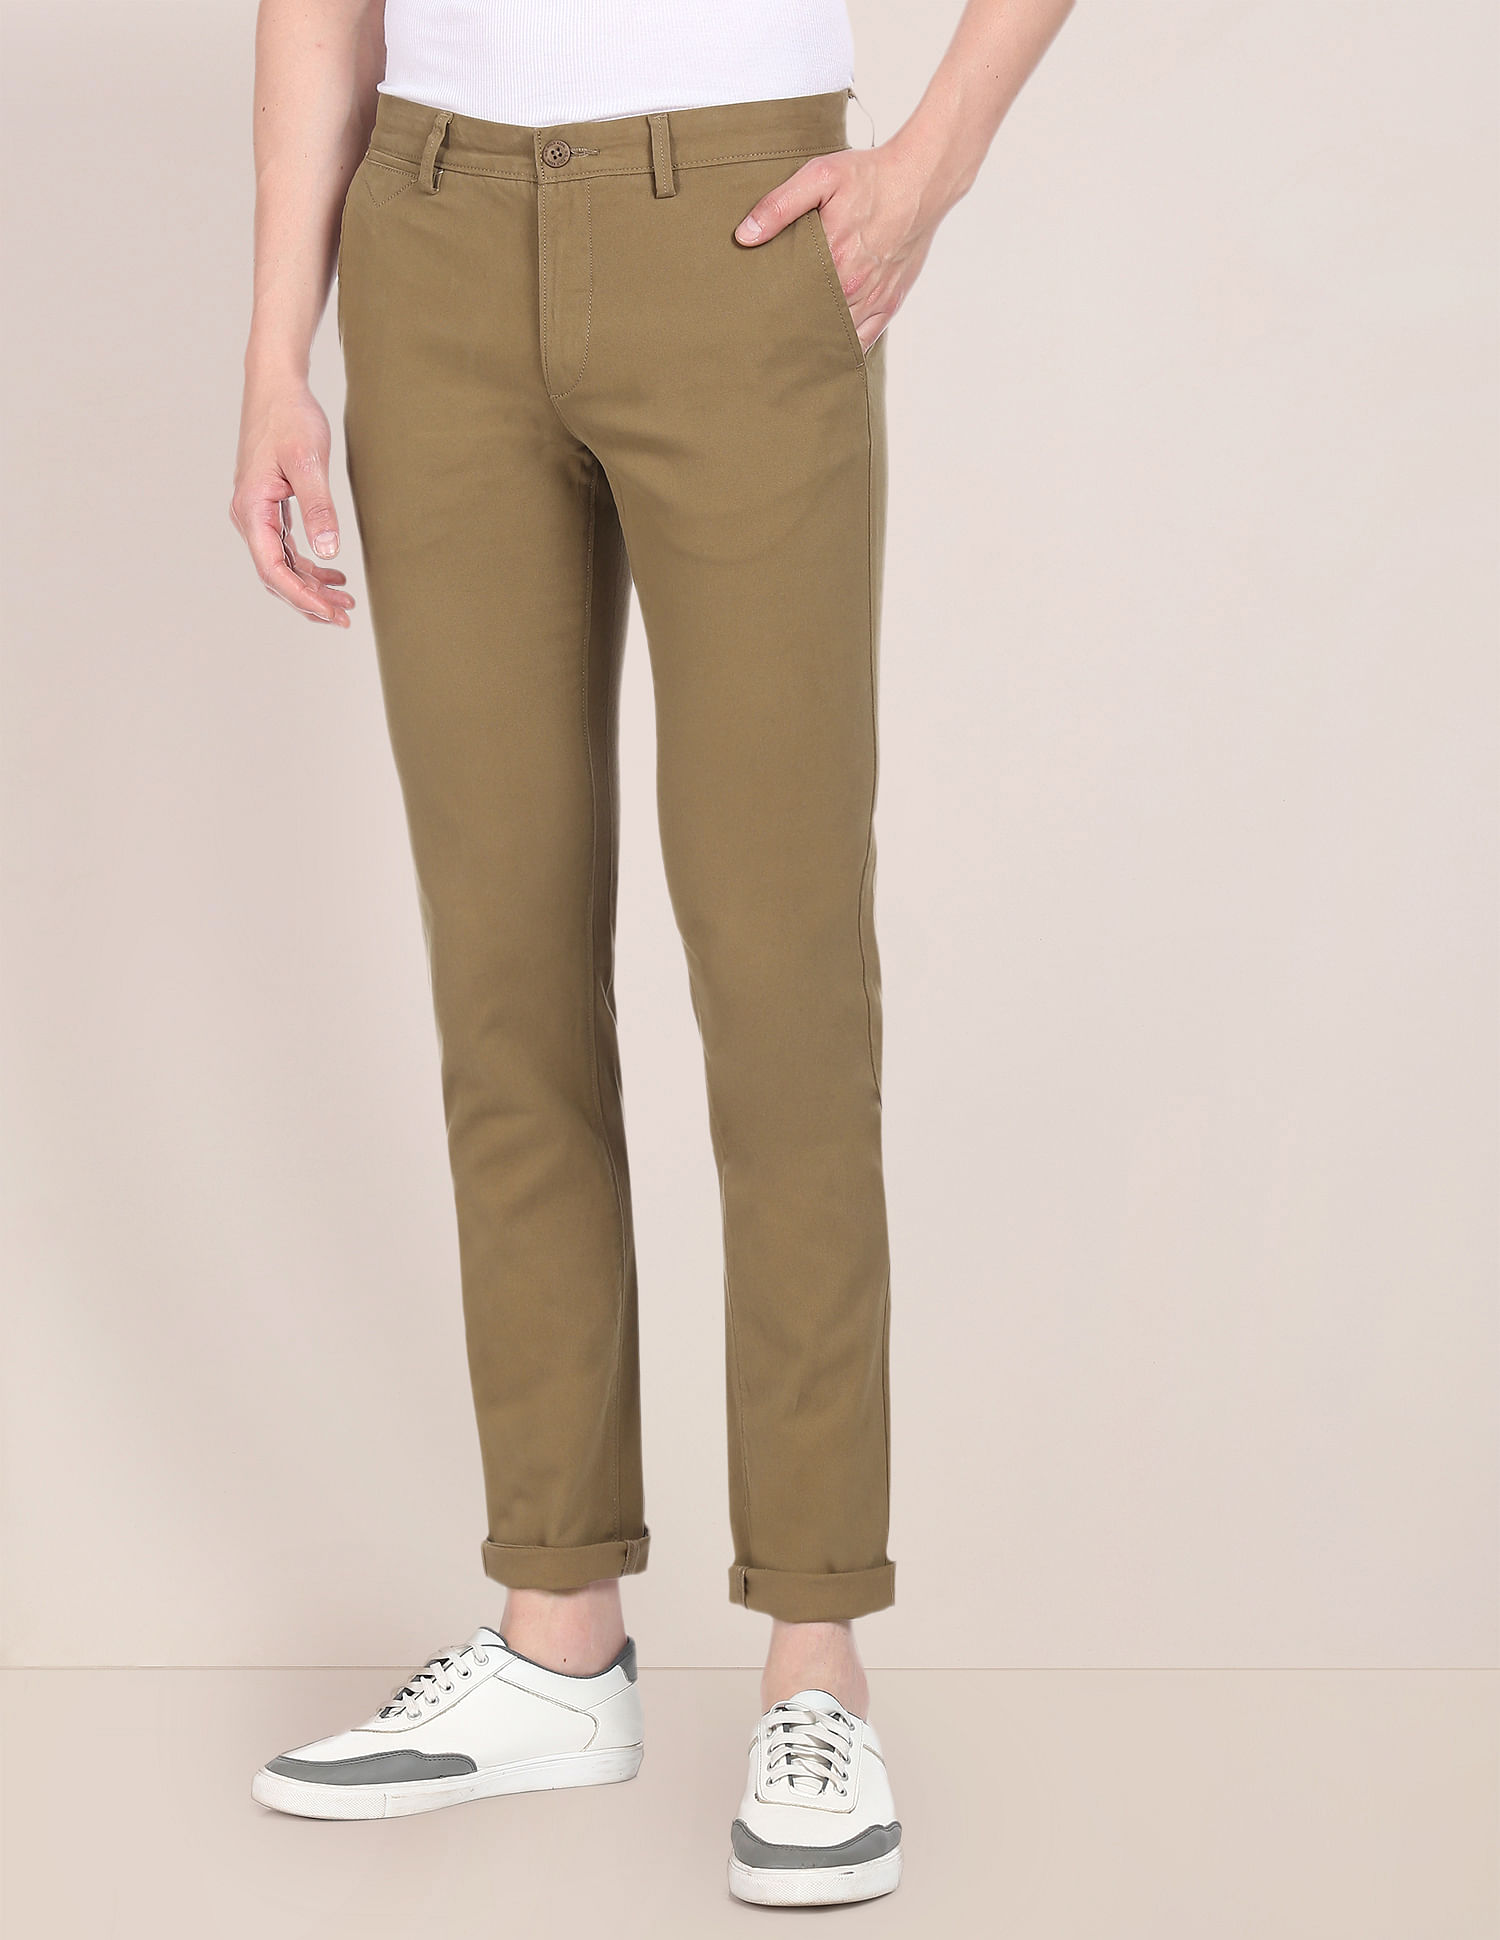 Buy Men's Cotton Lycra Casual Wear Slim Fit Pants|Cottonworld